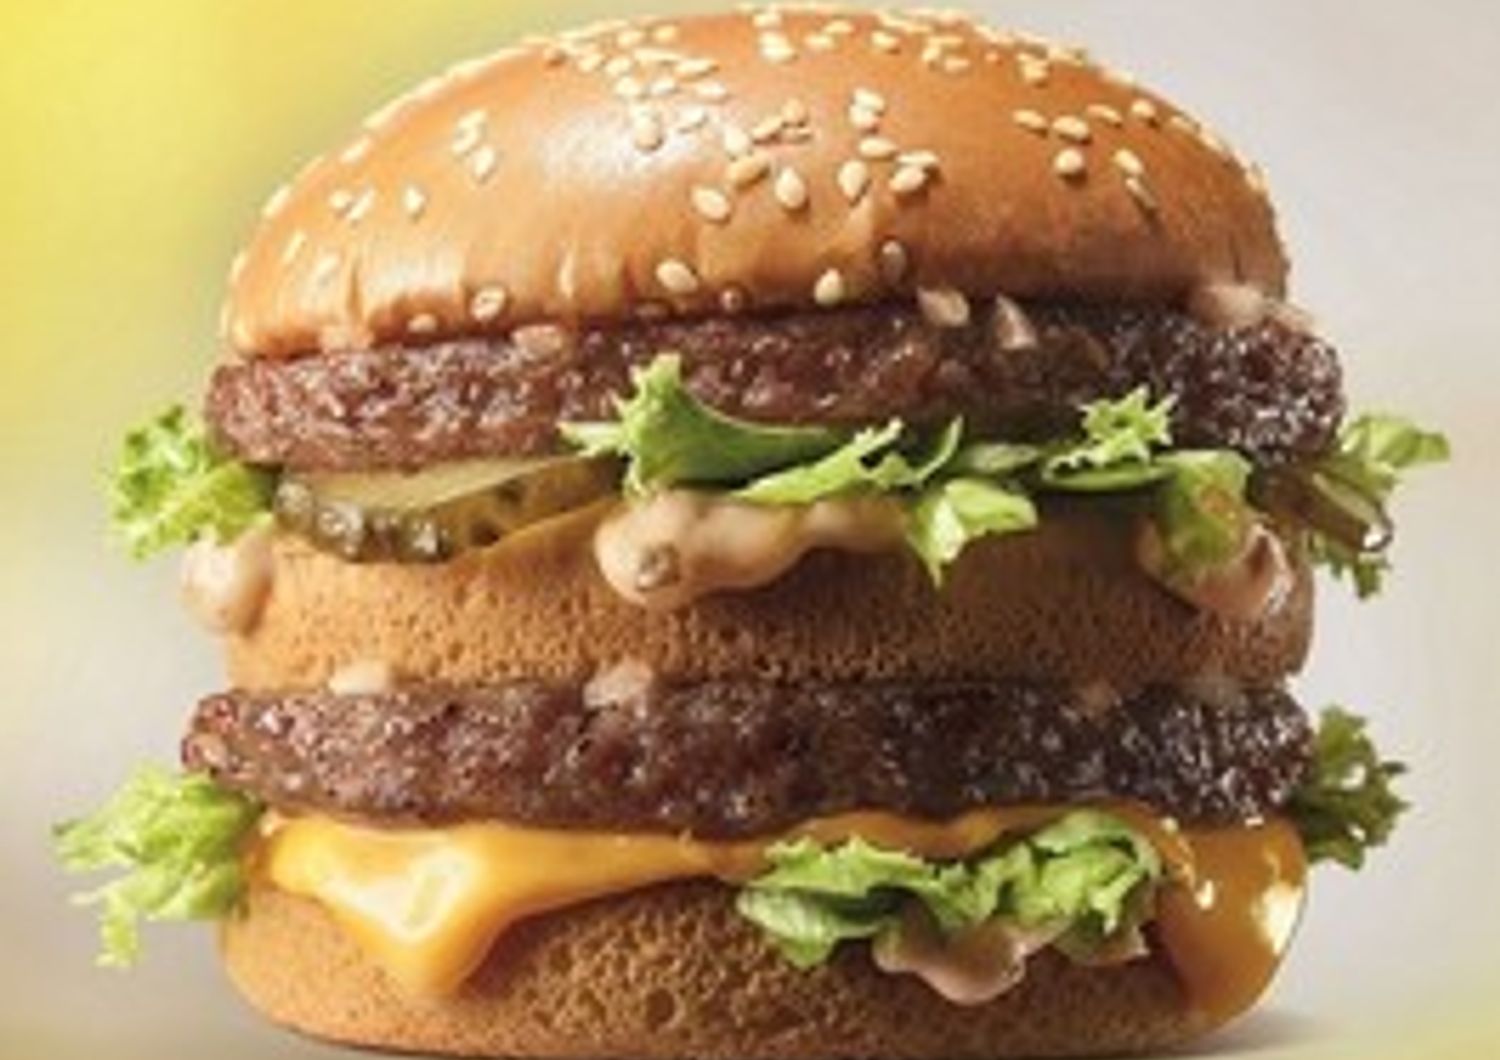 Il nuovo Big Mac in versione Best Burger